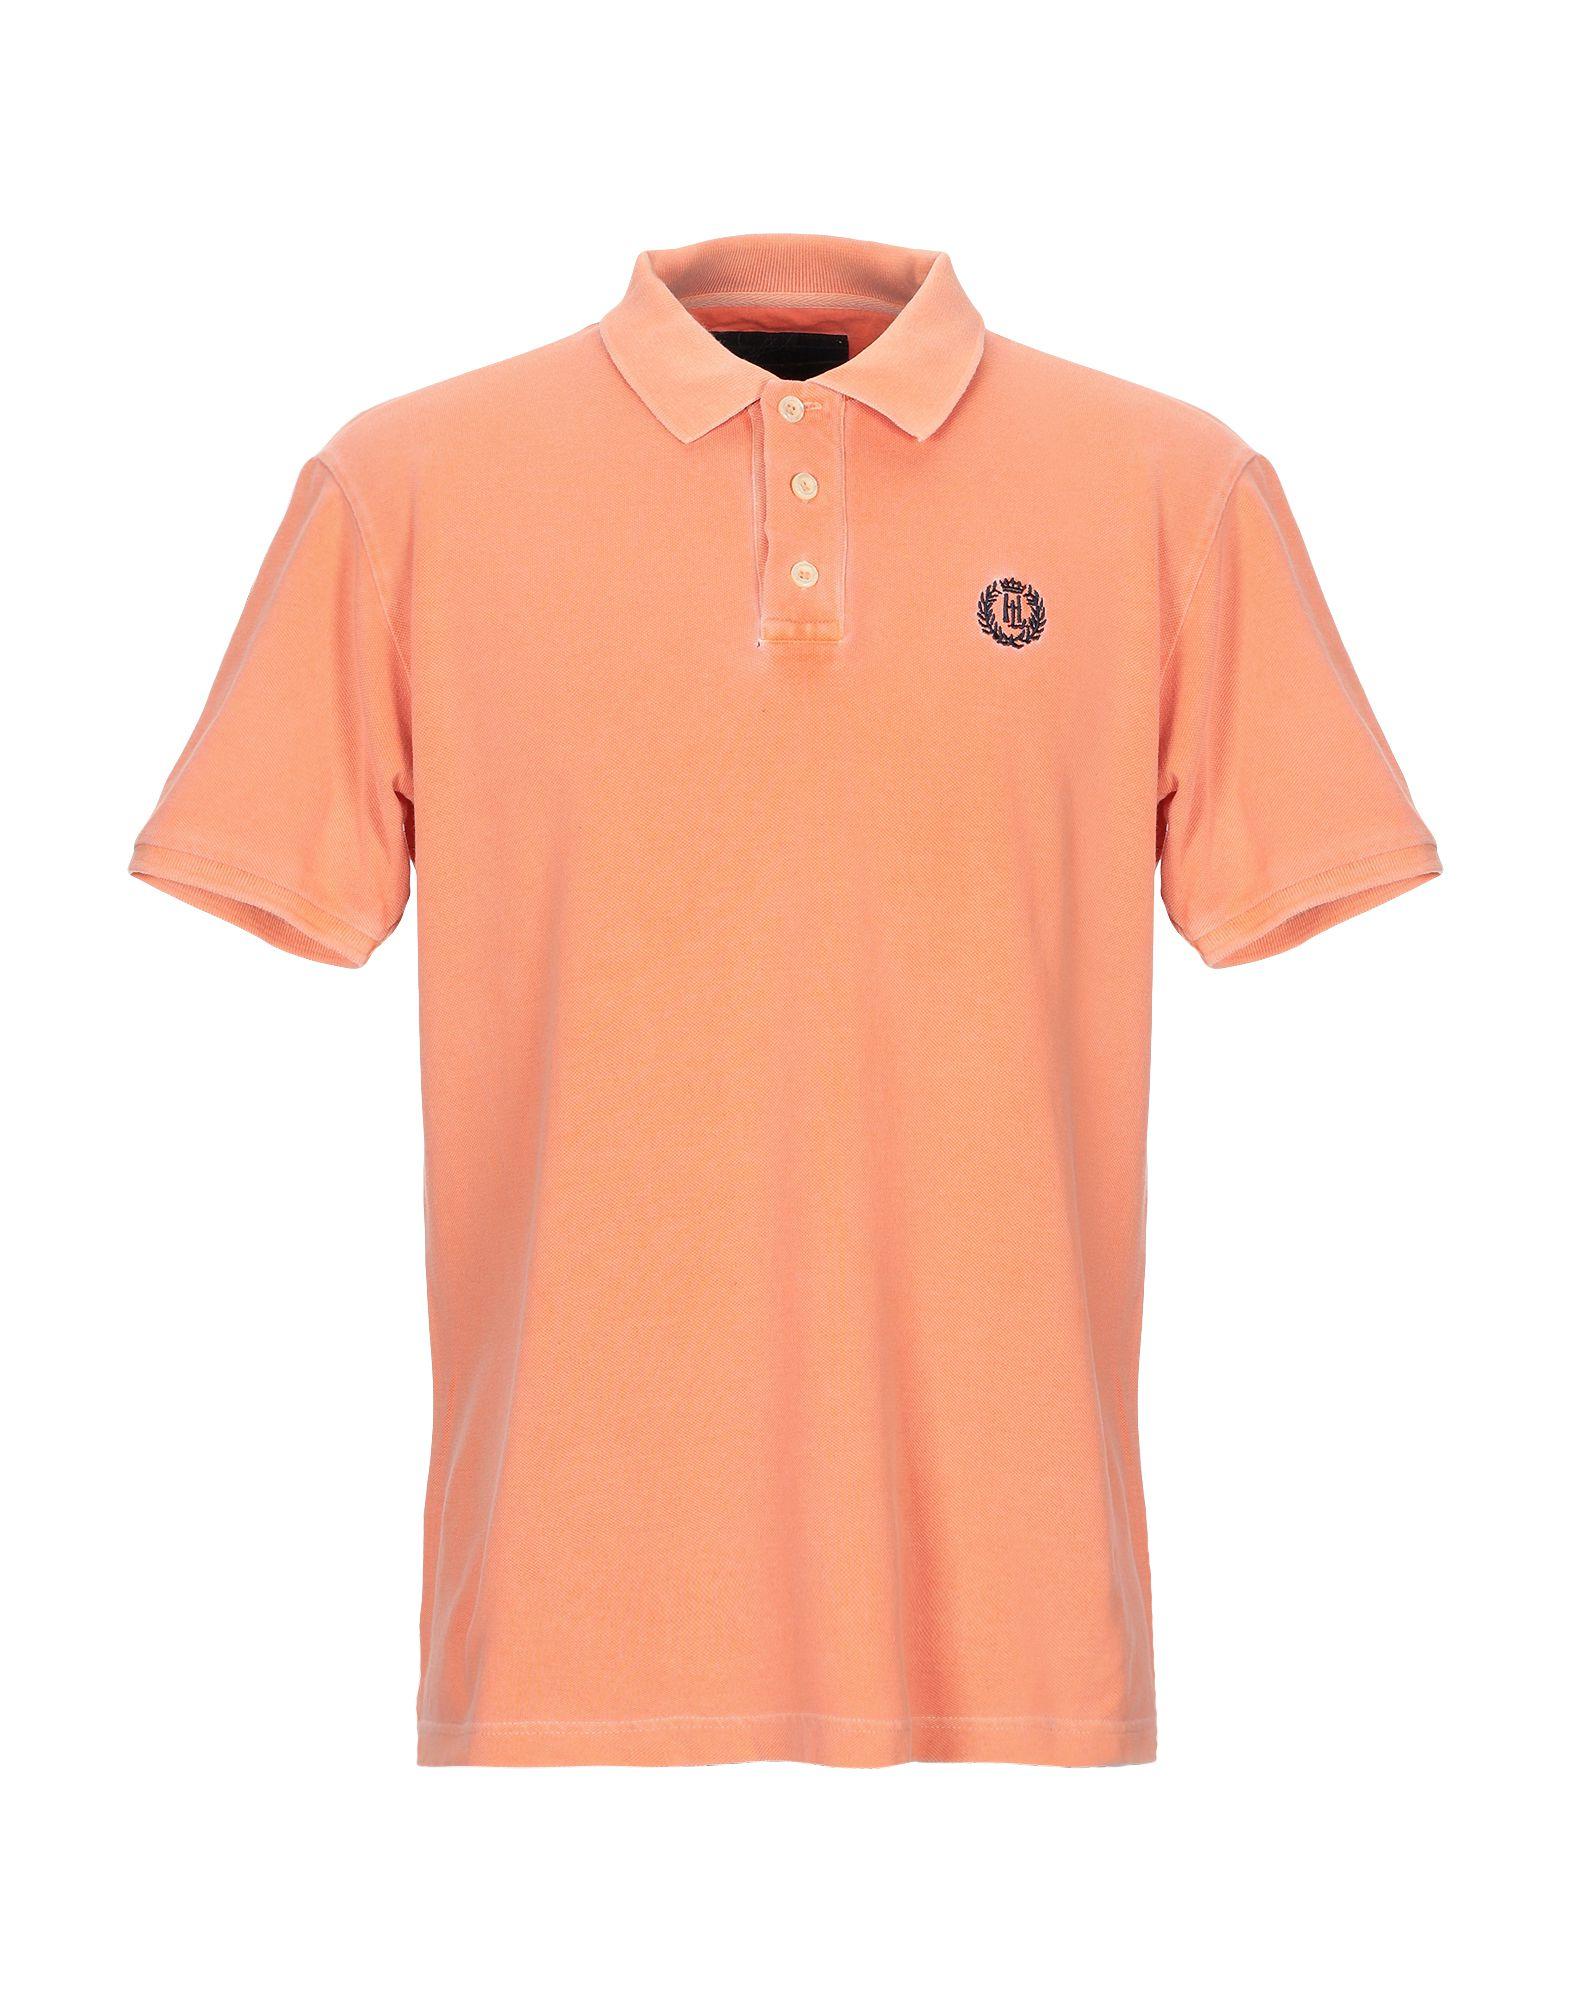 Lyst - Henri Lloyd Polo Shirt in Orange for Men